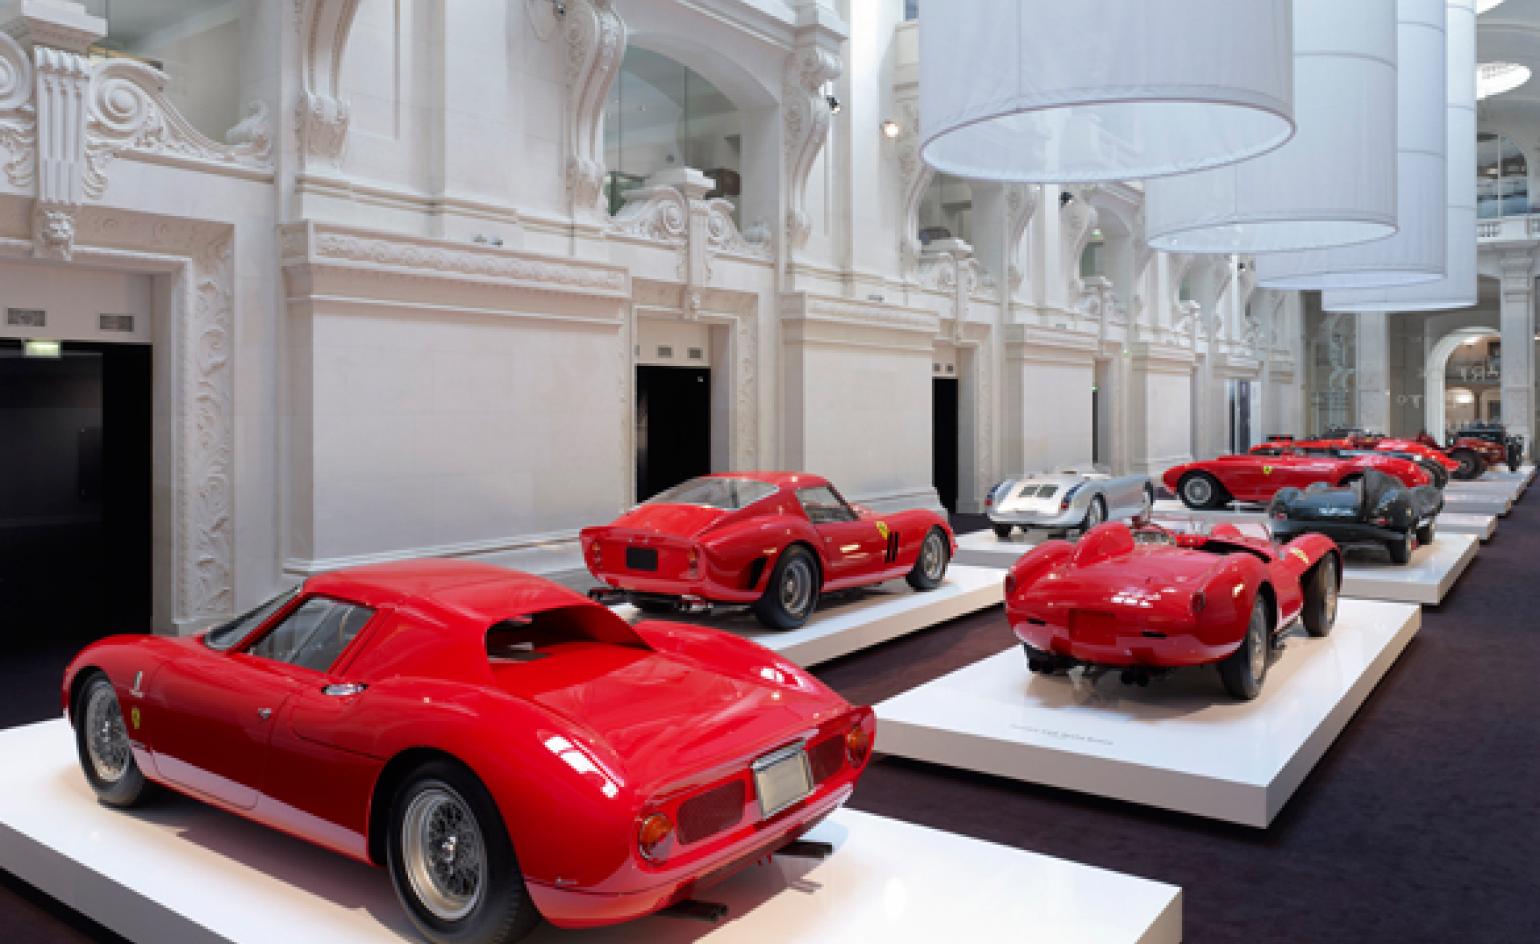 Ralph Lauren's car collection on show in Paris